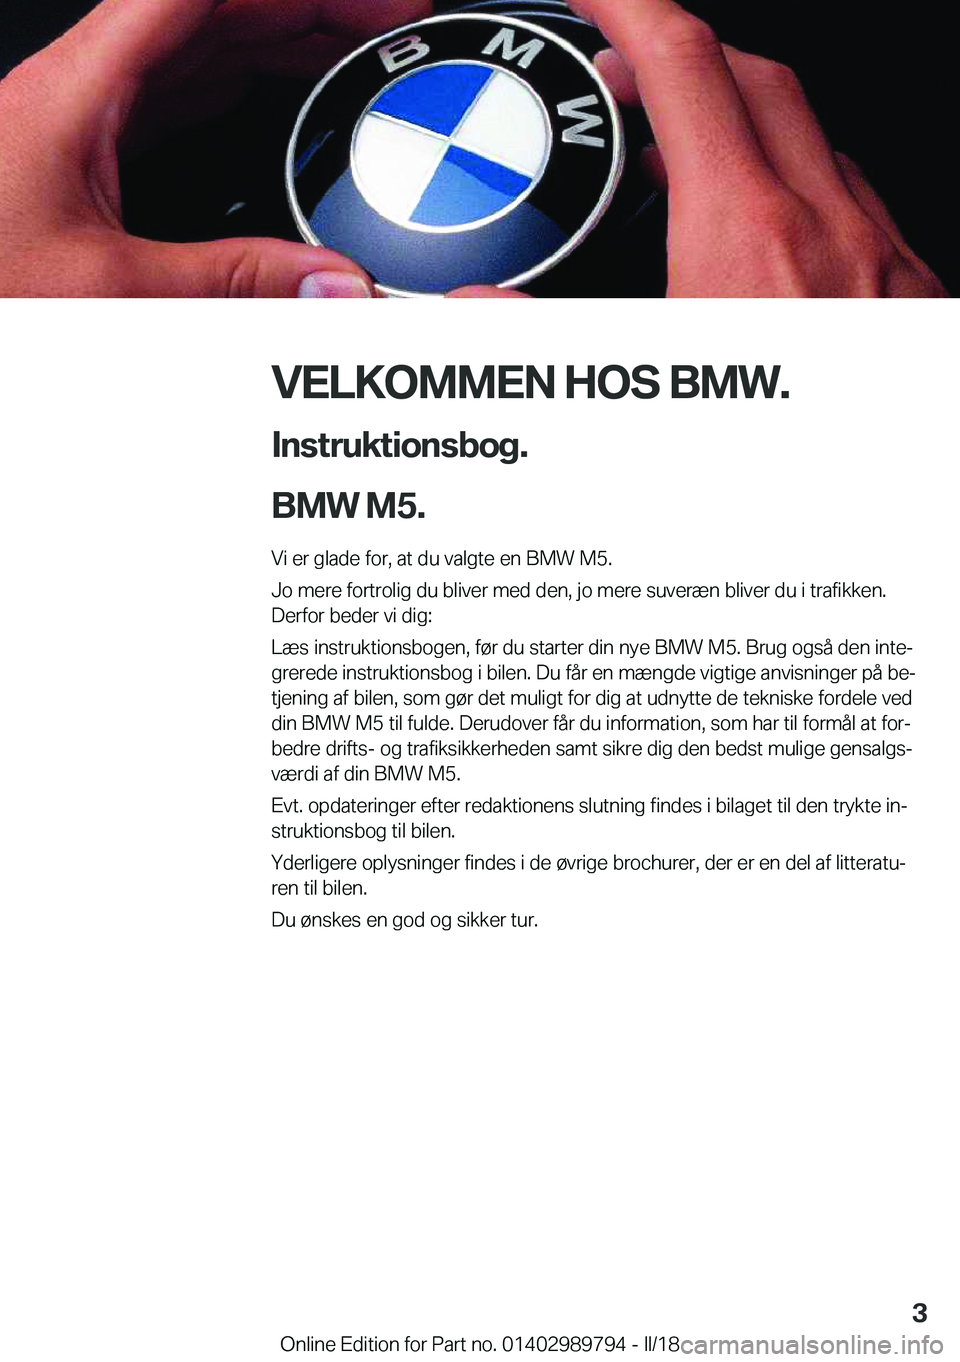 BMW M5 2018  InstruktionsbØger (in Danish) �V�E�L�K�O�M�M�E�N��H�O�S��B�M�W�.
�I�n�s�t�r�u�k�t�i�o�n�s�b�o�g�.
�B�M�W��M�5�. �V�i� �e�r� �g�l�a�d�e� �f�o�r�,� �a�t� �d�u� �v�a�l�g�t�e� �e�n� �B�M�W� �M�5�.
�J�o� �m�e�r�e� �f�o�r�t�r�o�l�i�g